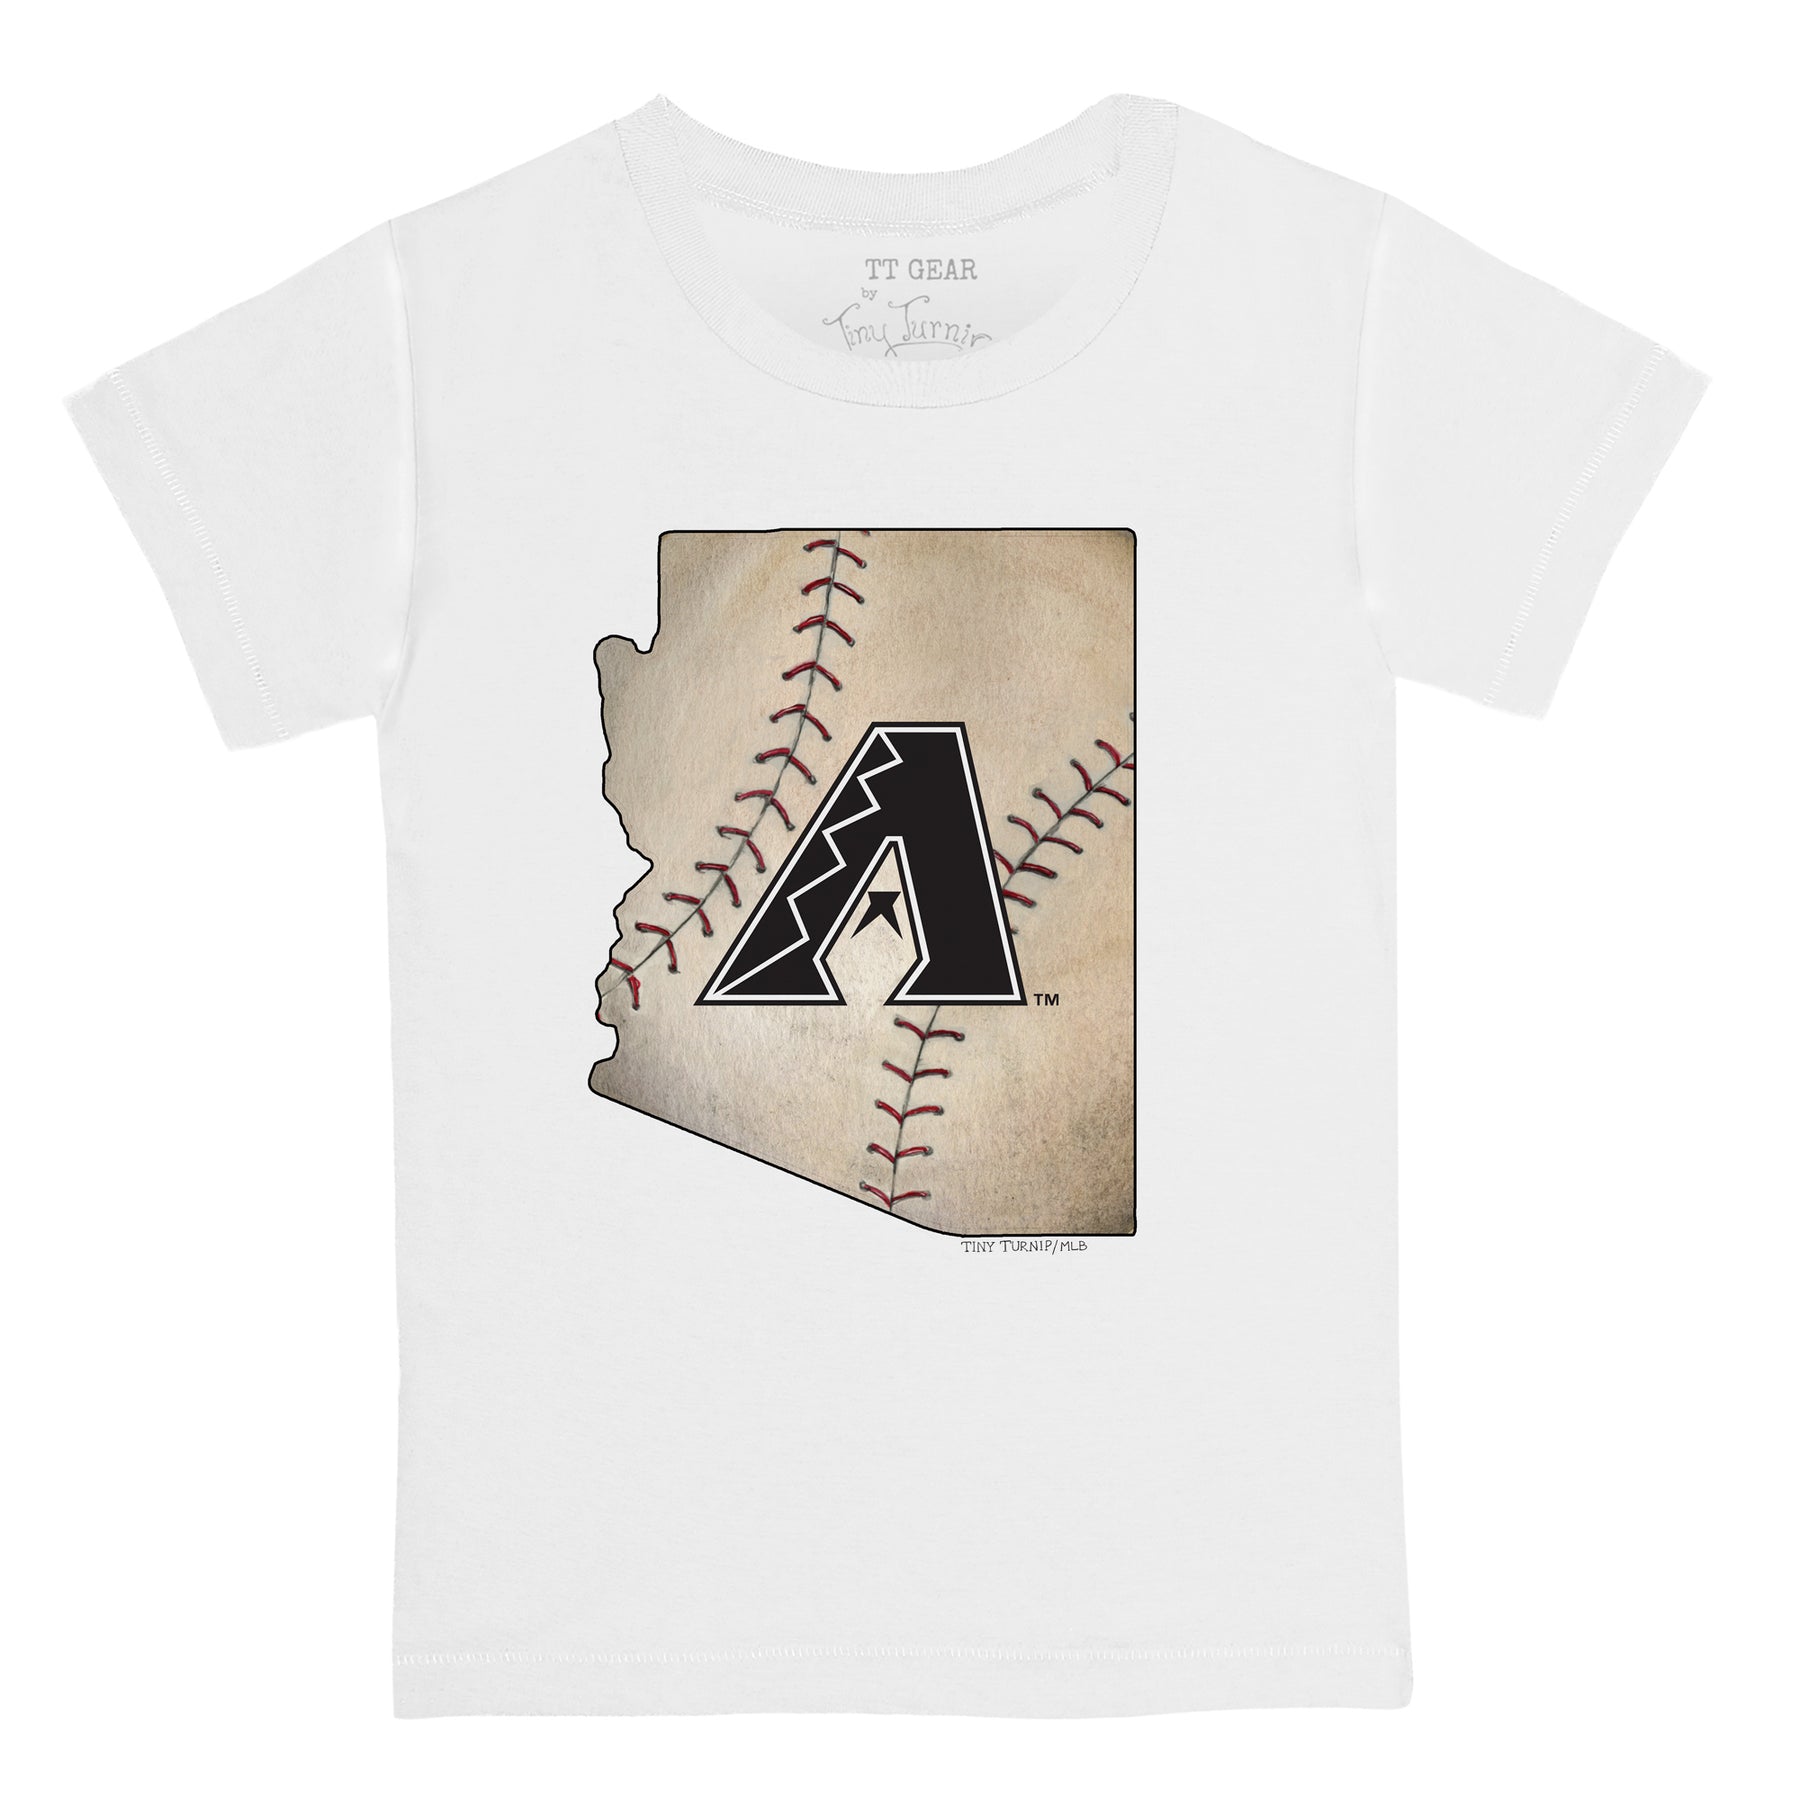 Arizona Diamondbacks Baseball Apparel, Gear, T-Shirts, Hats - MLB